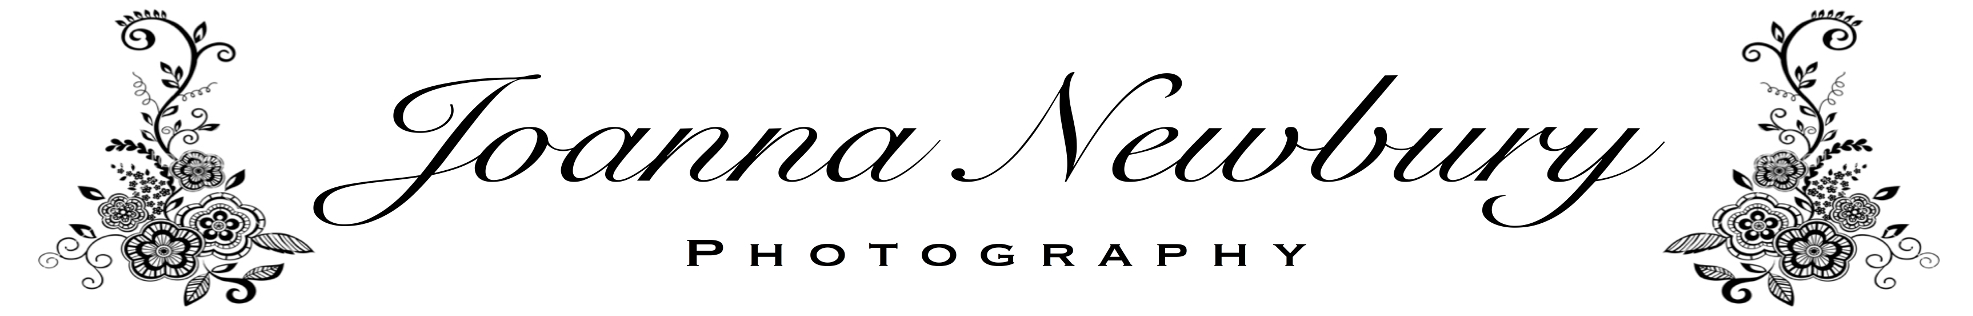 Jo Newbury Professional photographer, weddings and portraits rectangle logo.